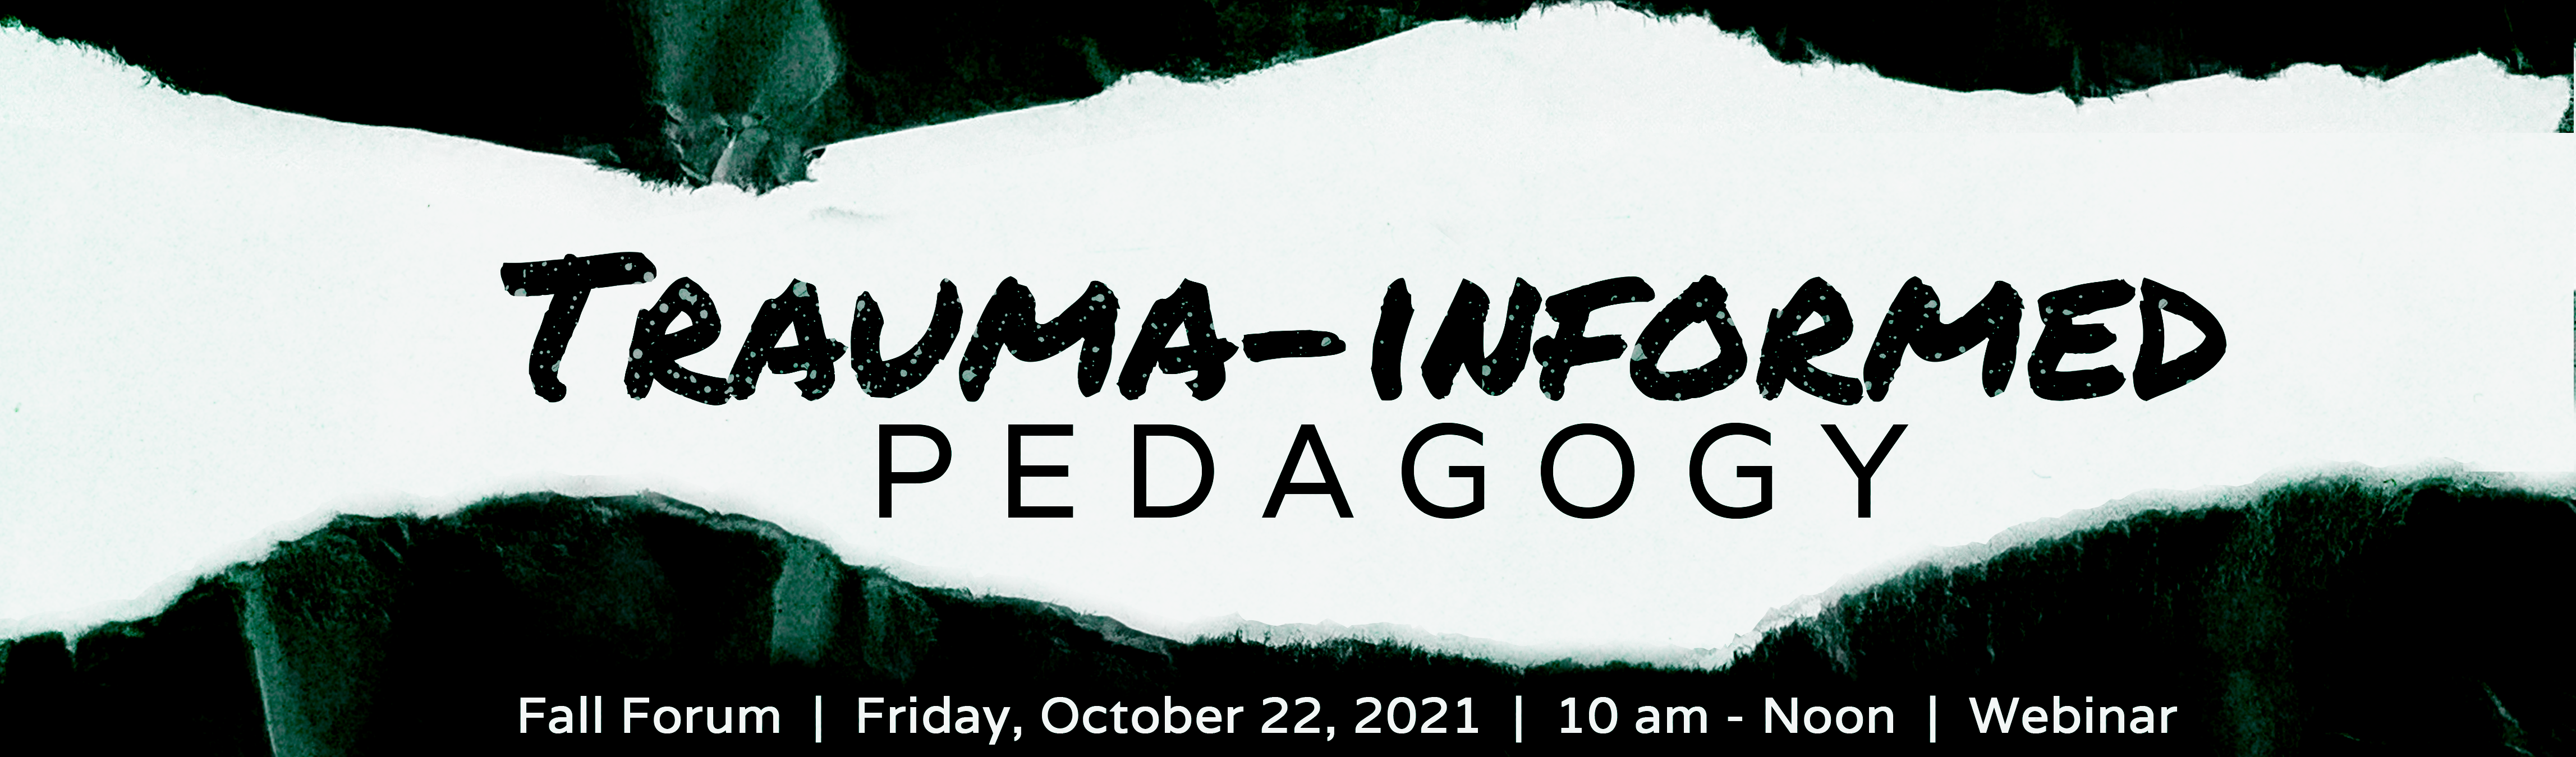 Fall Forum 2021 Trauma-informed Pedagogy. October 22nd at 10:00am